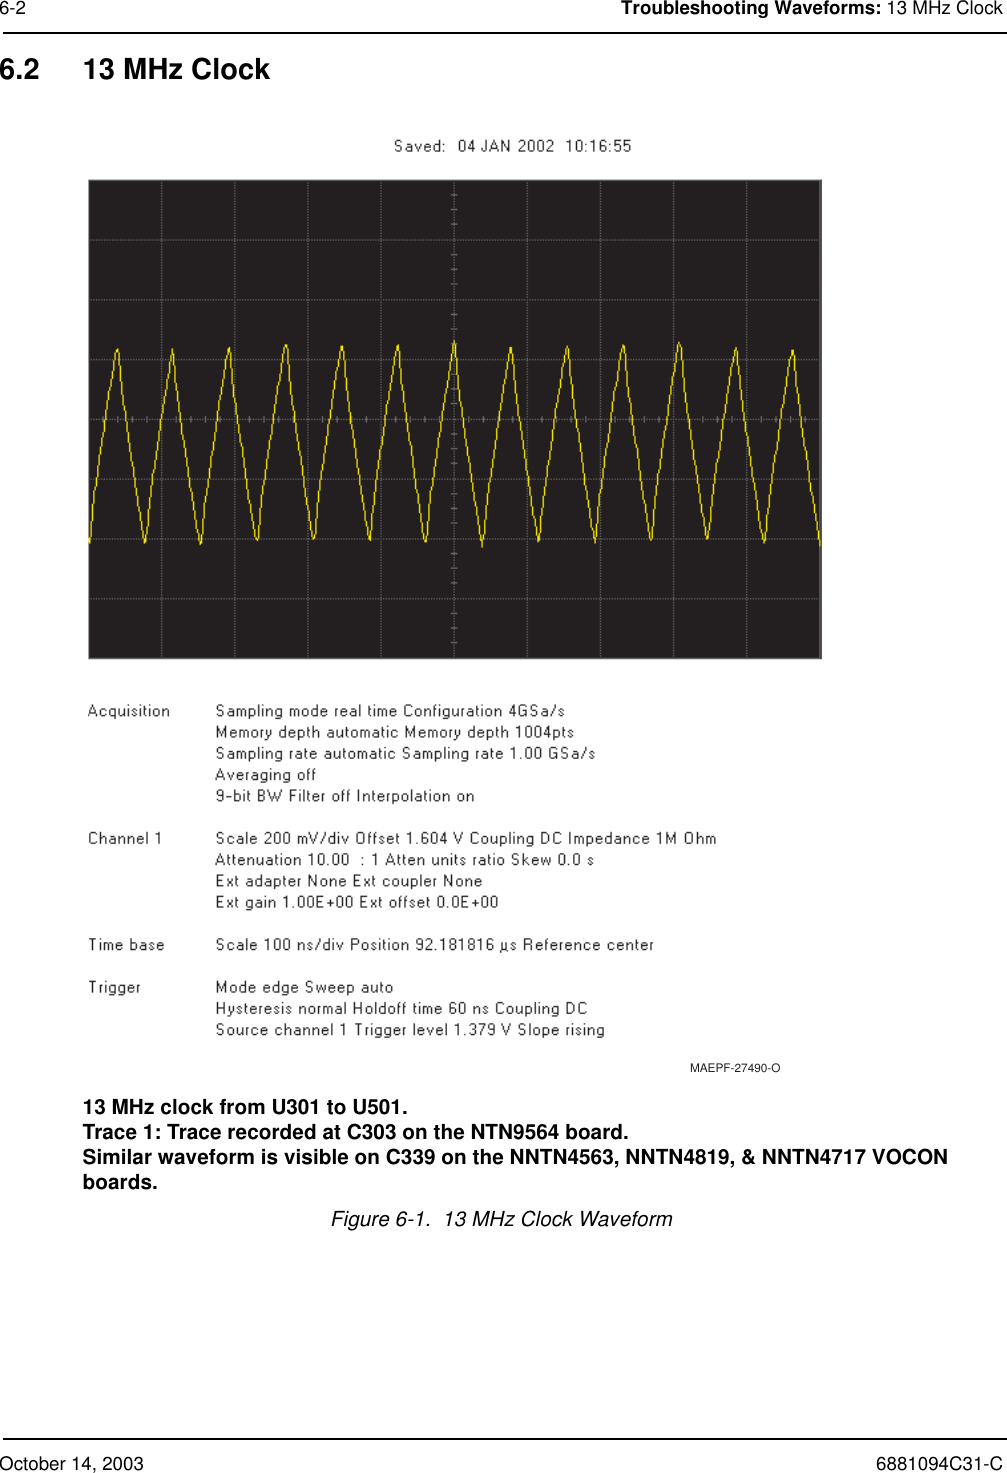 October 14, 2003 6881094C31-C6-2 Troubleshooting Waveforms: 13 MHz Clock6.2 13 MHz Clock13 MHz clock from U301 to U501.Trace 1: Trace recorded at C303 on the NTN9564 board.Similar waveform is visible on C339 on the NNTN4563, NNTN4819, &amp; NNTN4717 VOCON boards.Figure 6-1.  13 MHz Clock WaveformMAEPF-27490-O